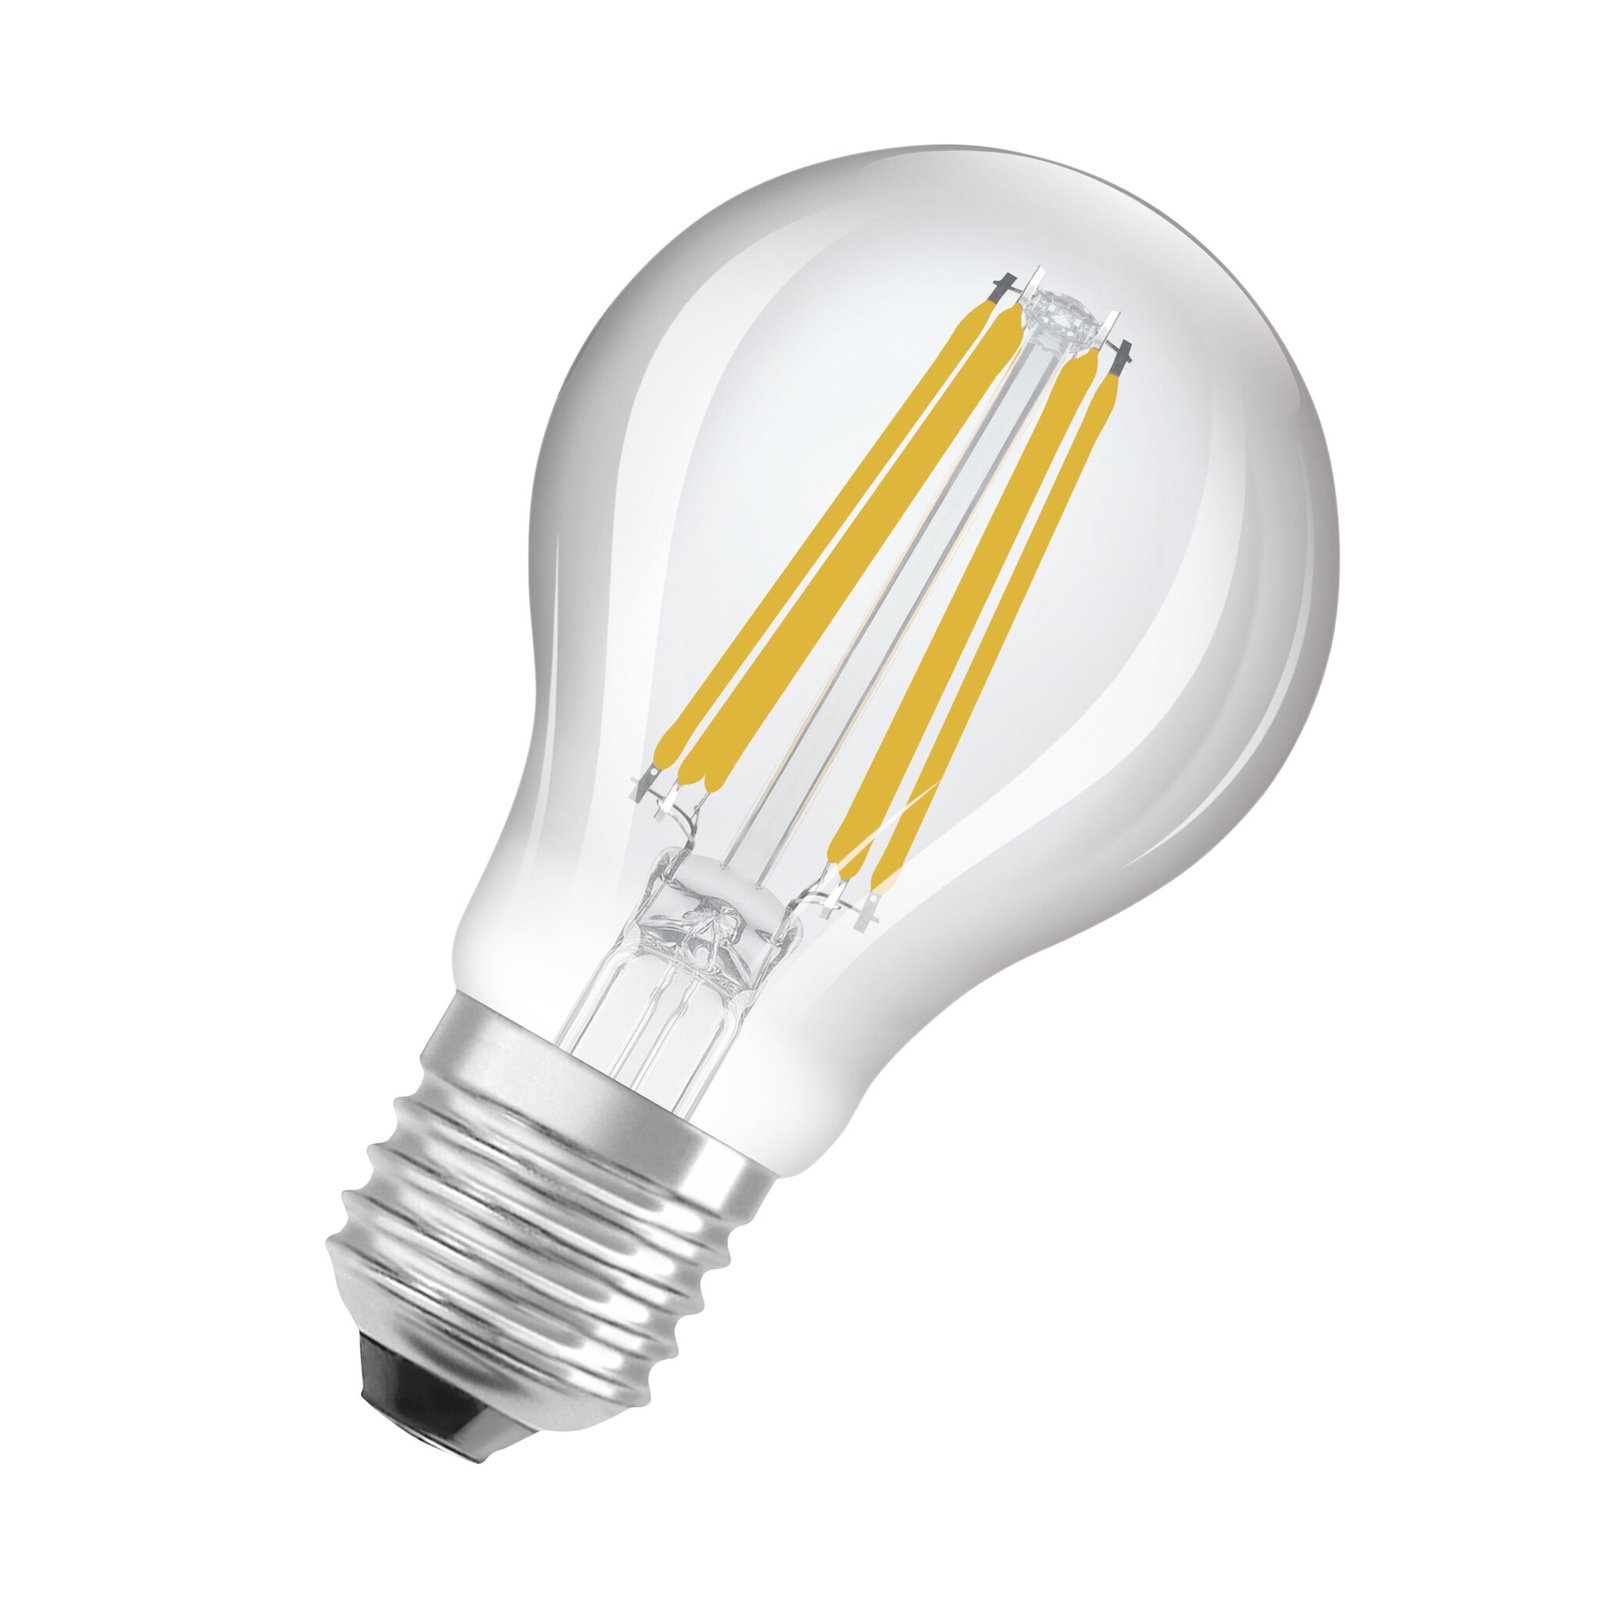 OSRAM LED bulb E27 A60 5W 1,055lm 3,000K clear